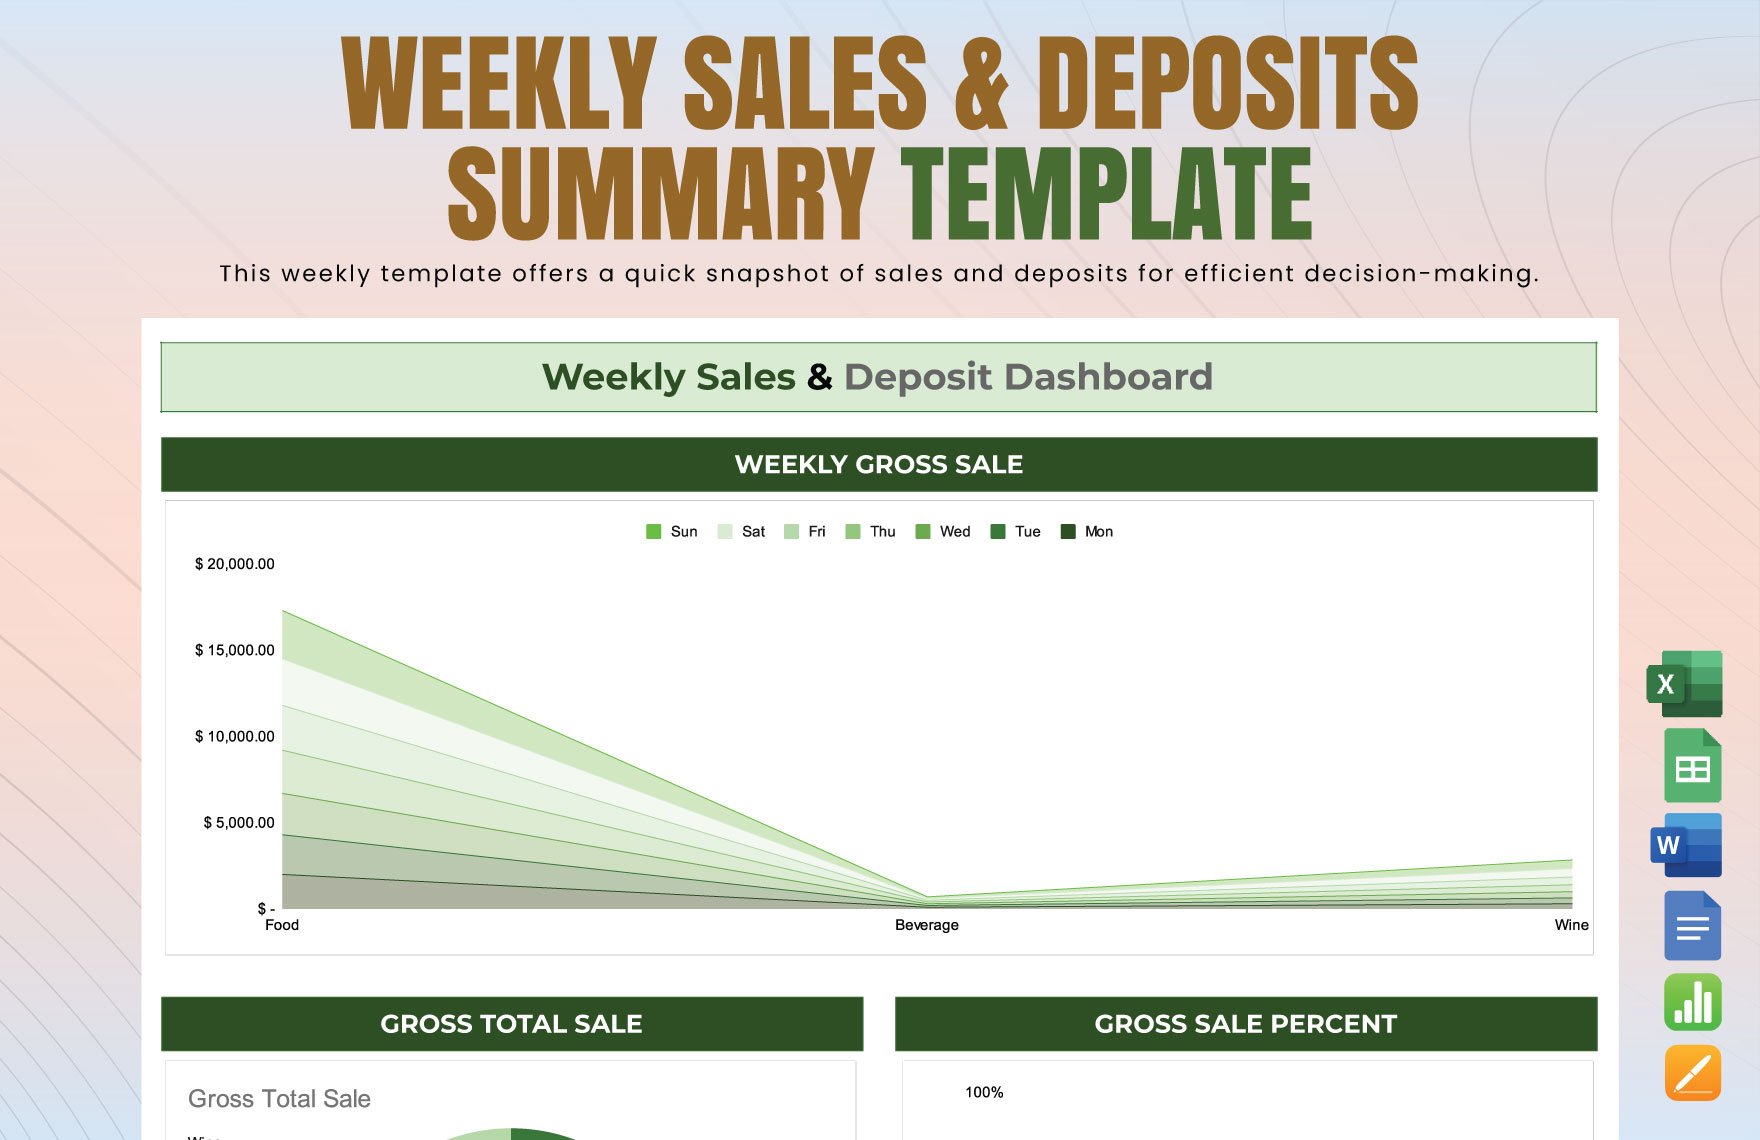 Weekly Sales & Deposits Summary Template